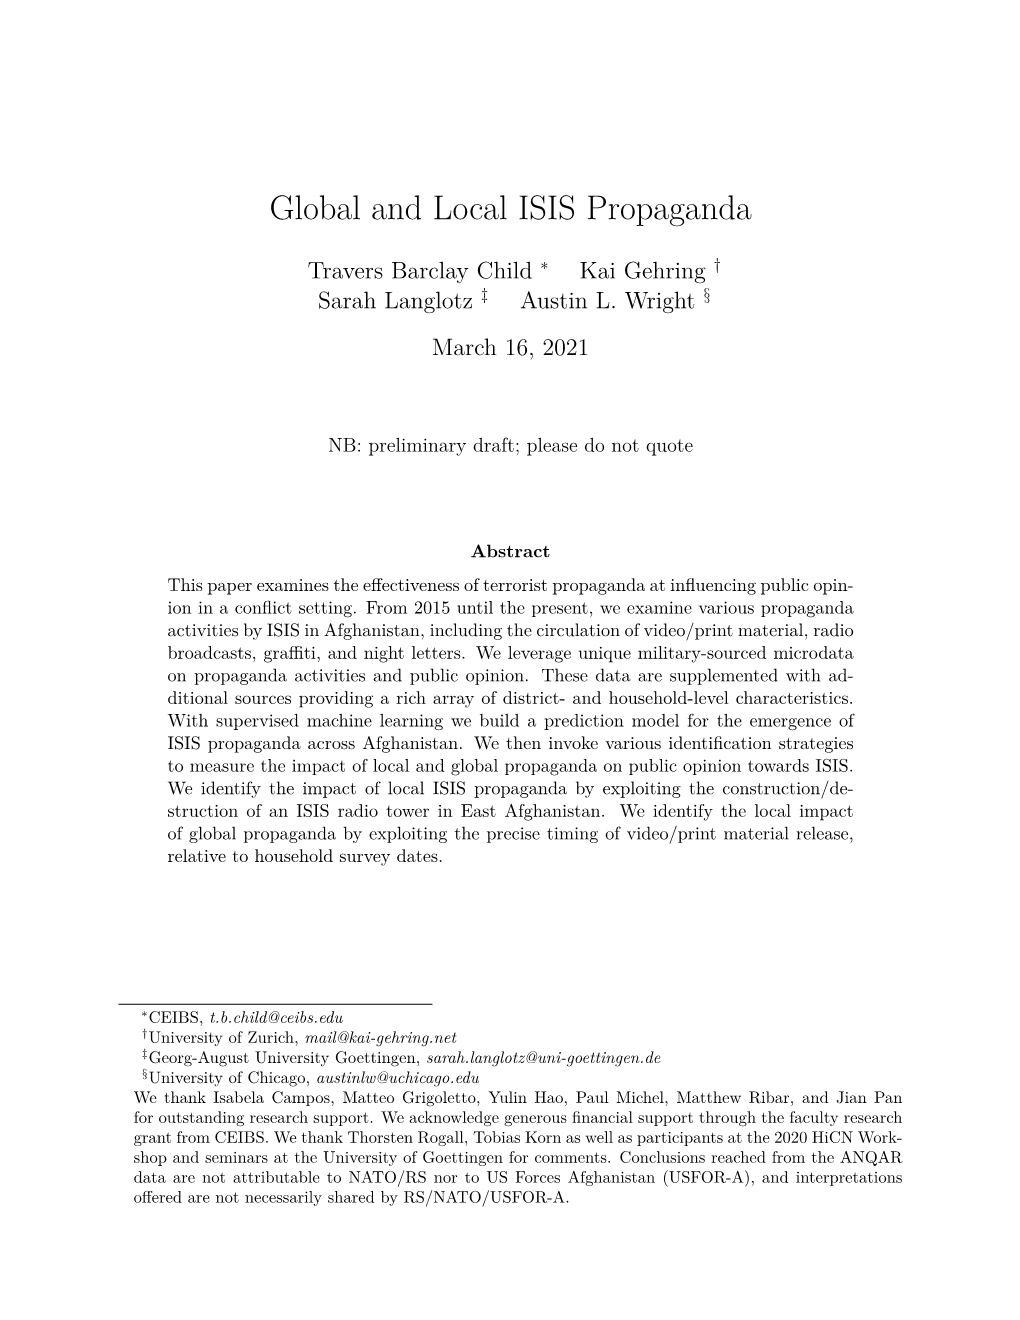 Global and Local Propaganda of an International Terrorist Organization